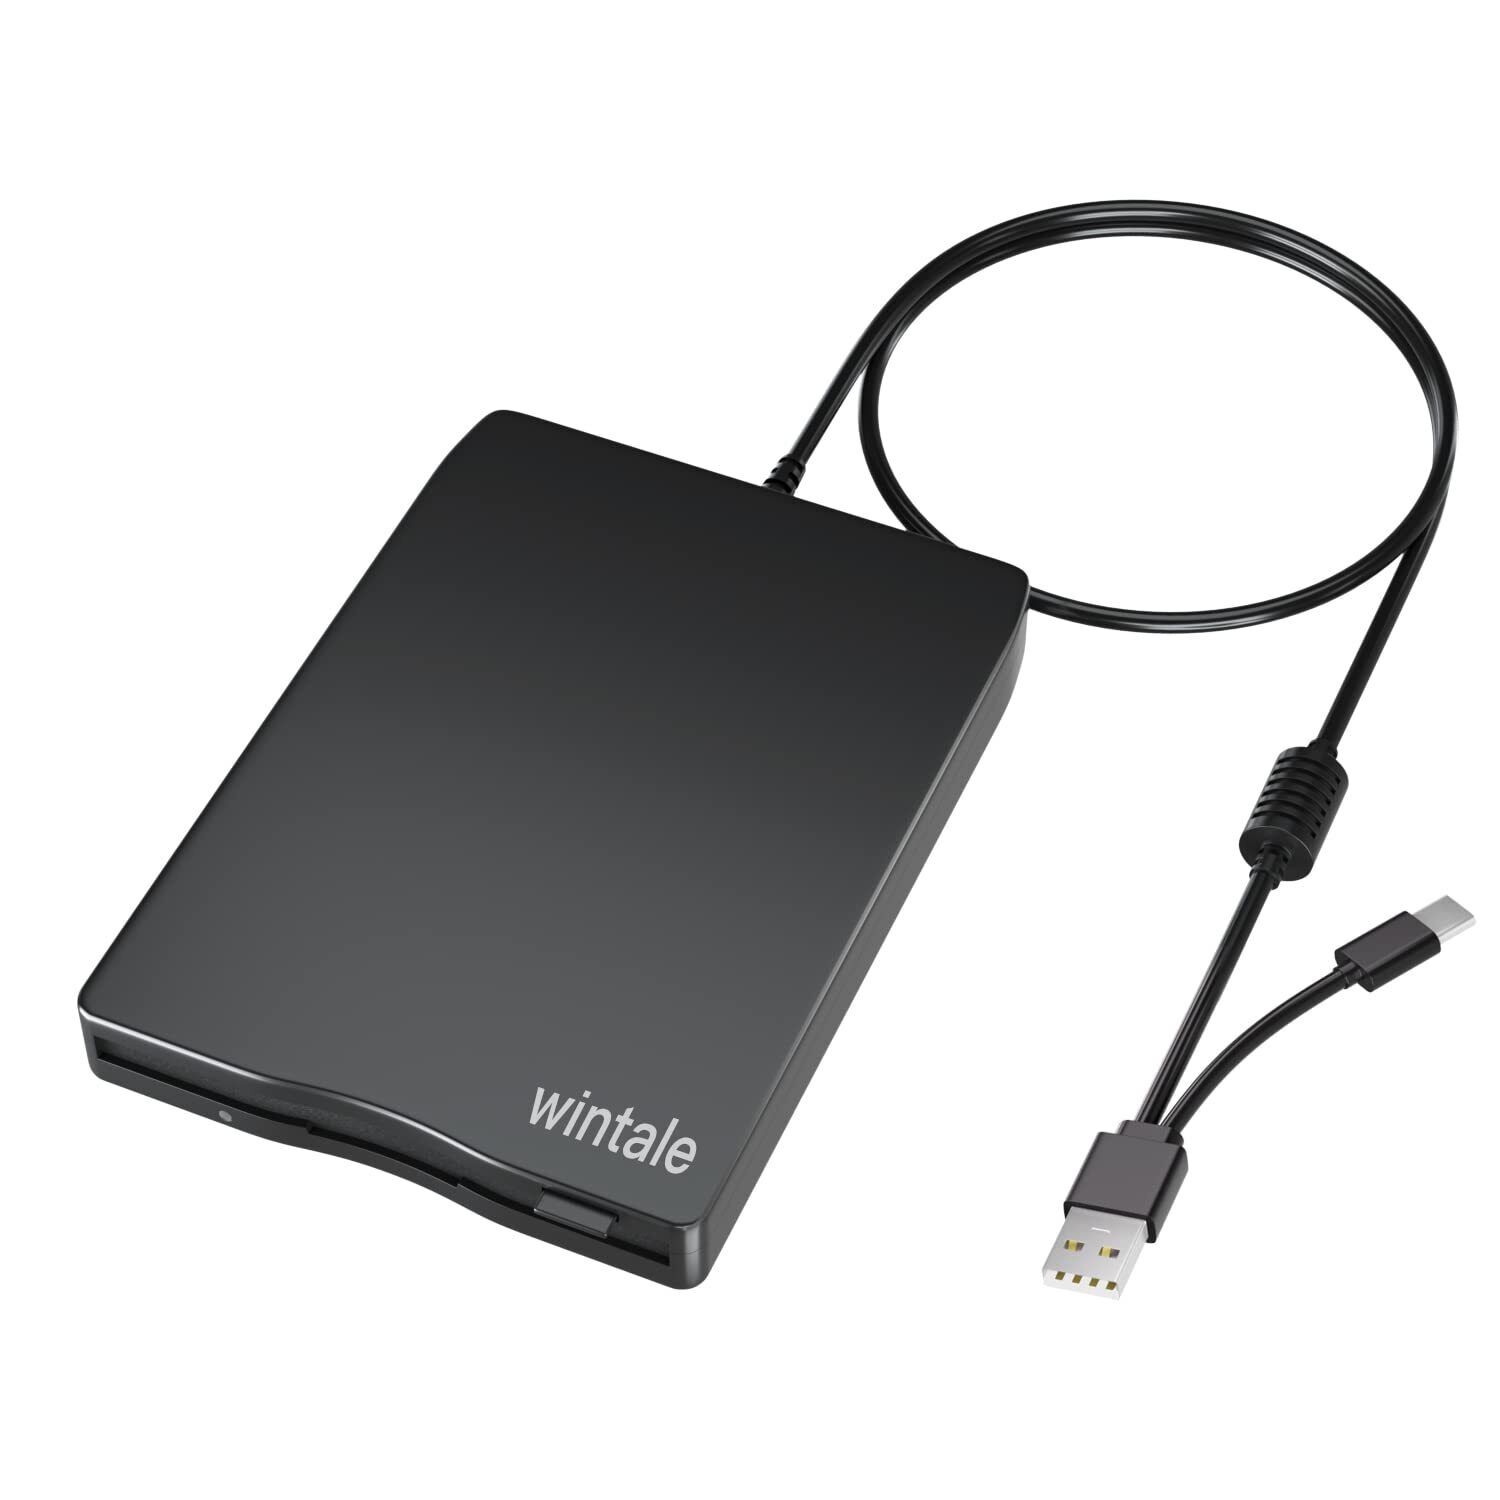 wintale USB Floopy Drive,Portable 3.5